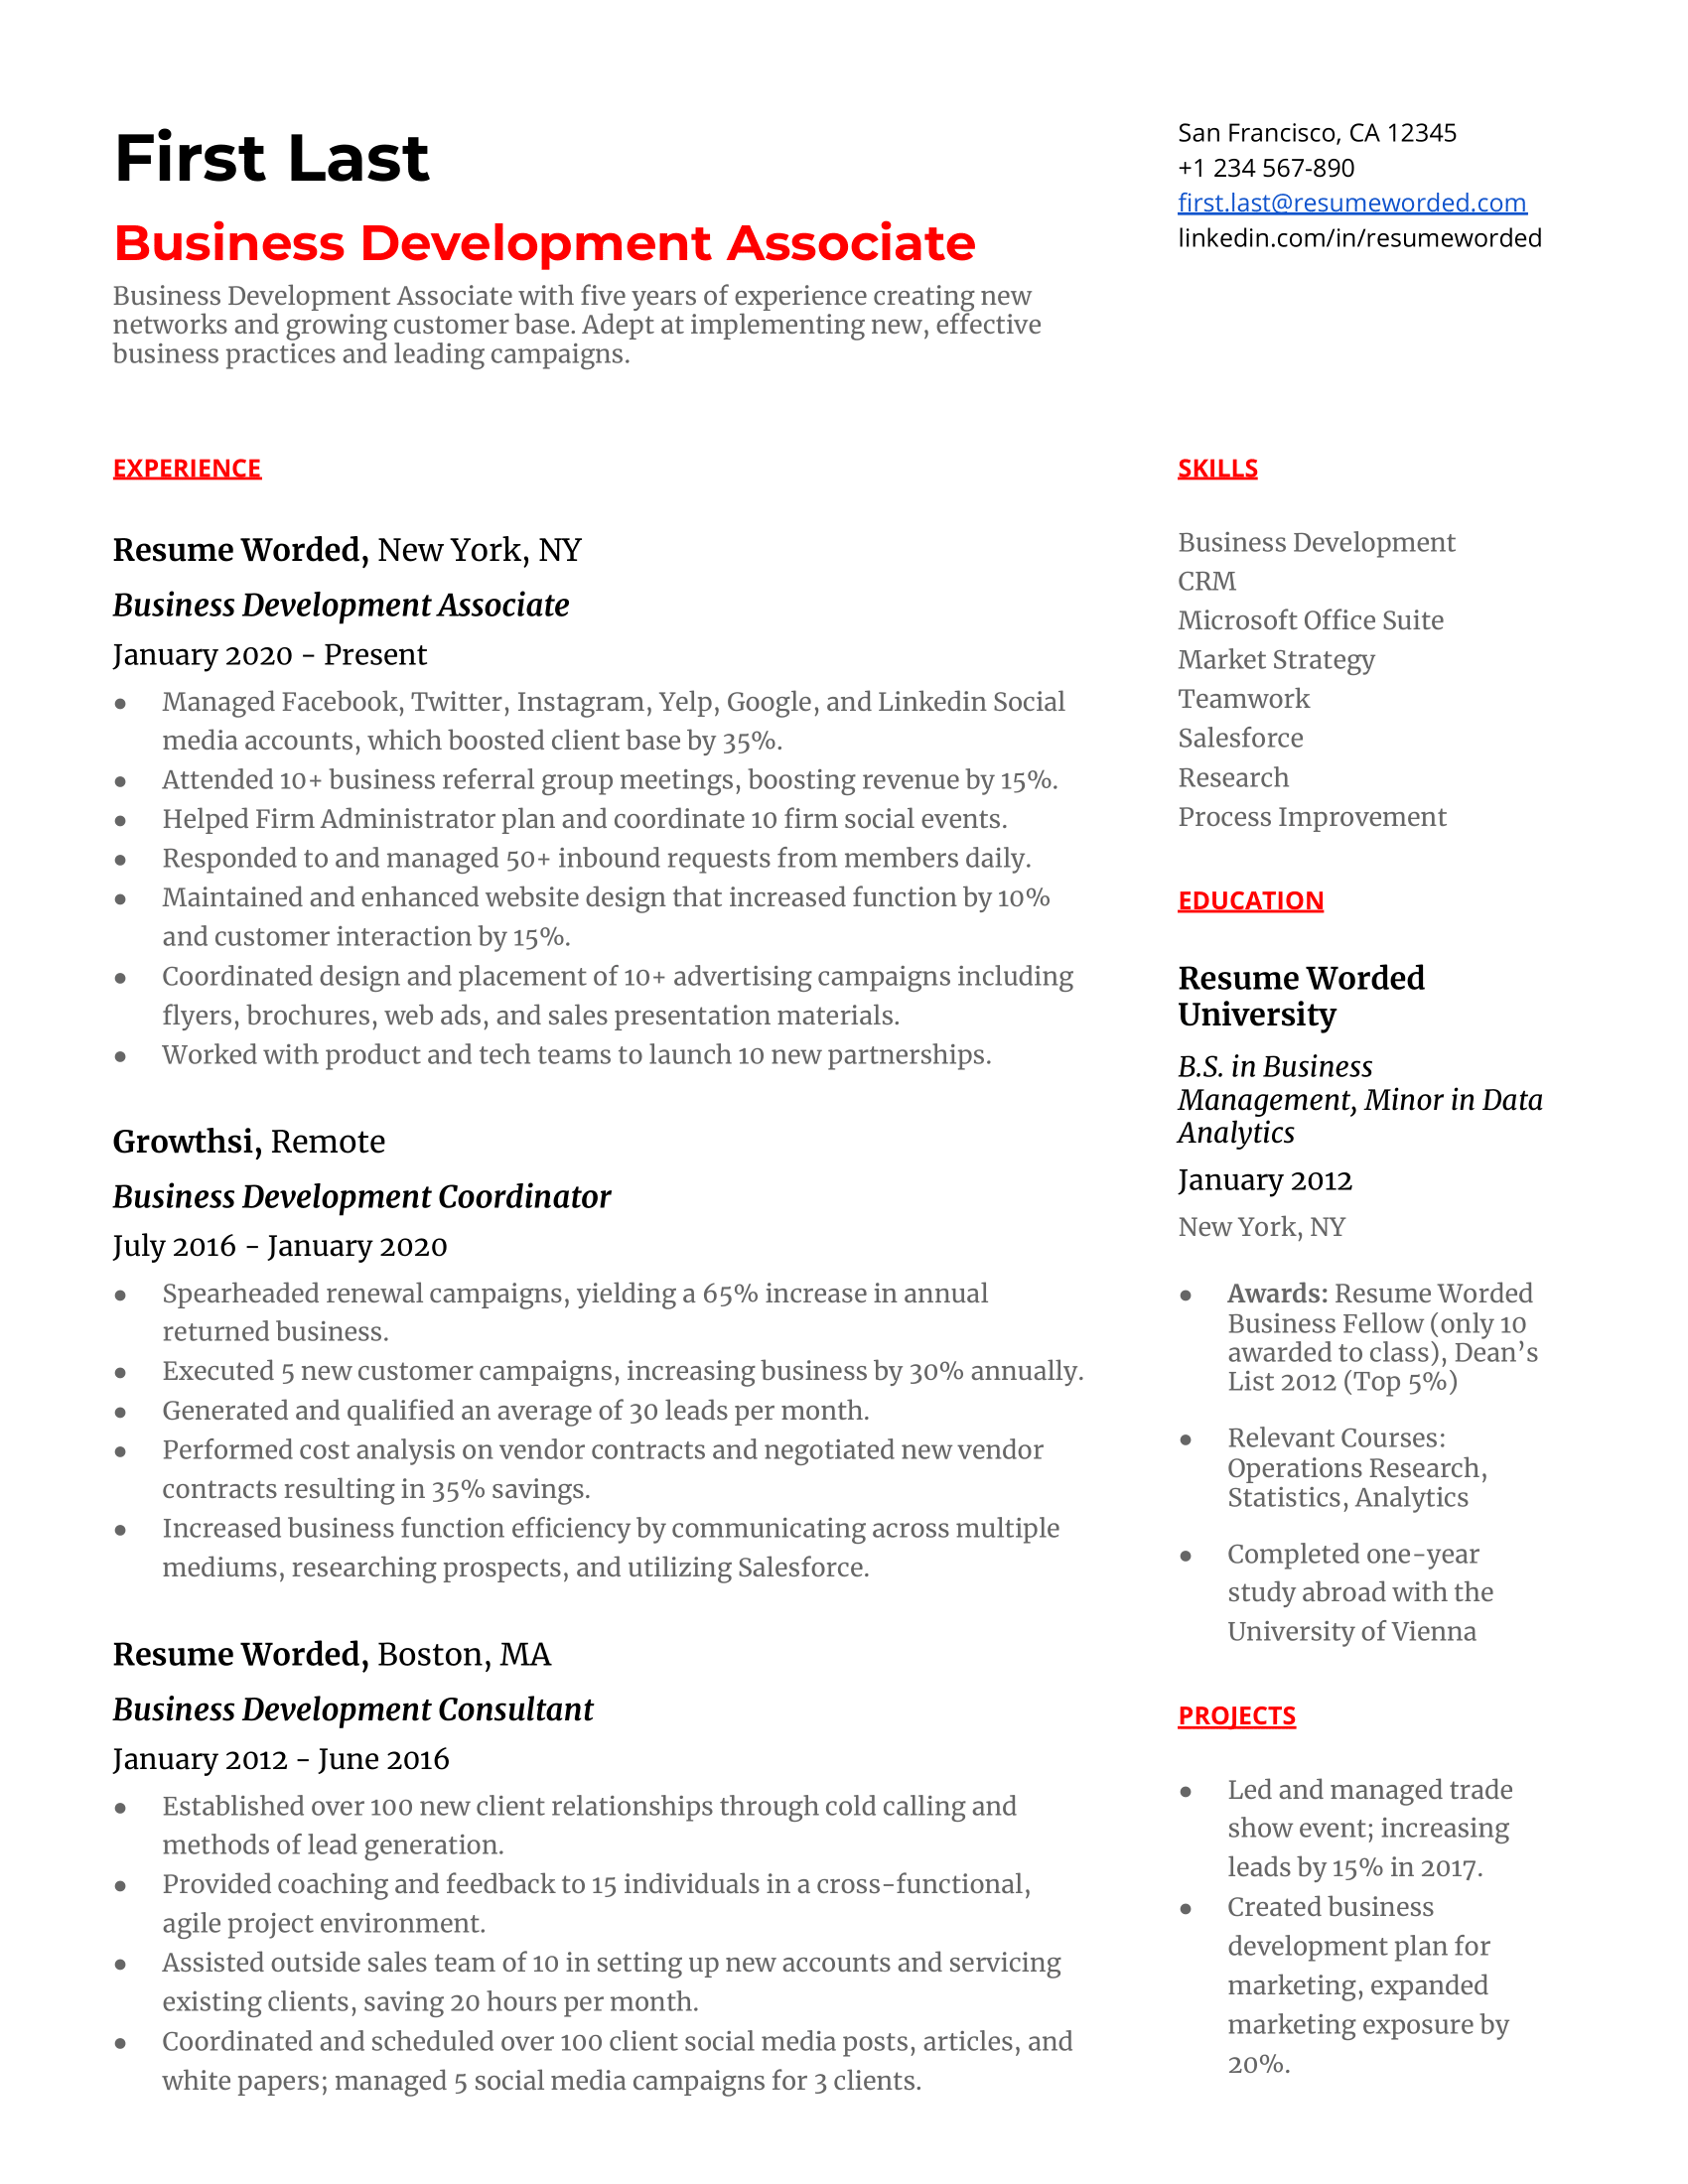 Business Development Associate Resume Template + Example